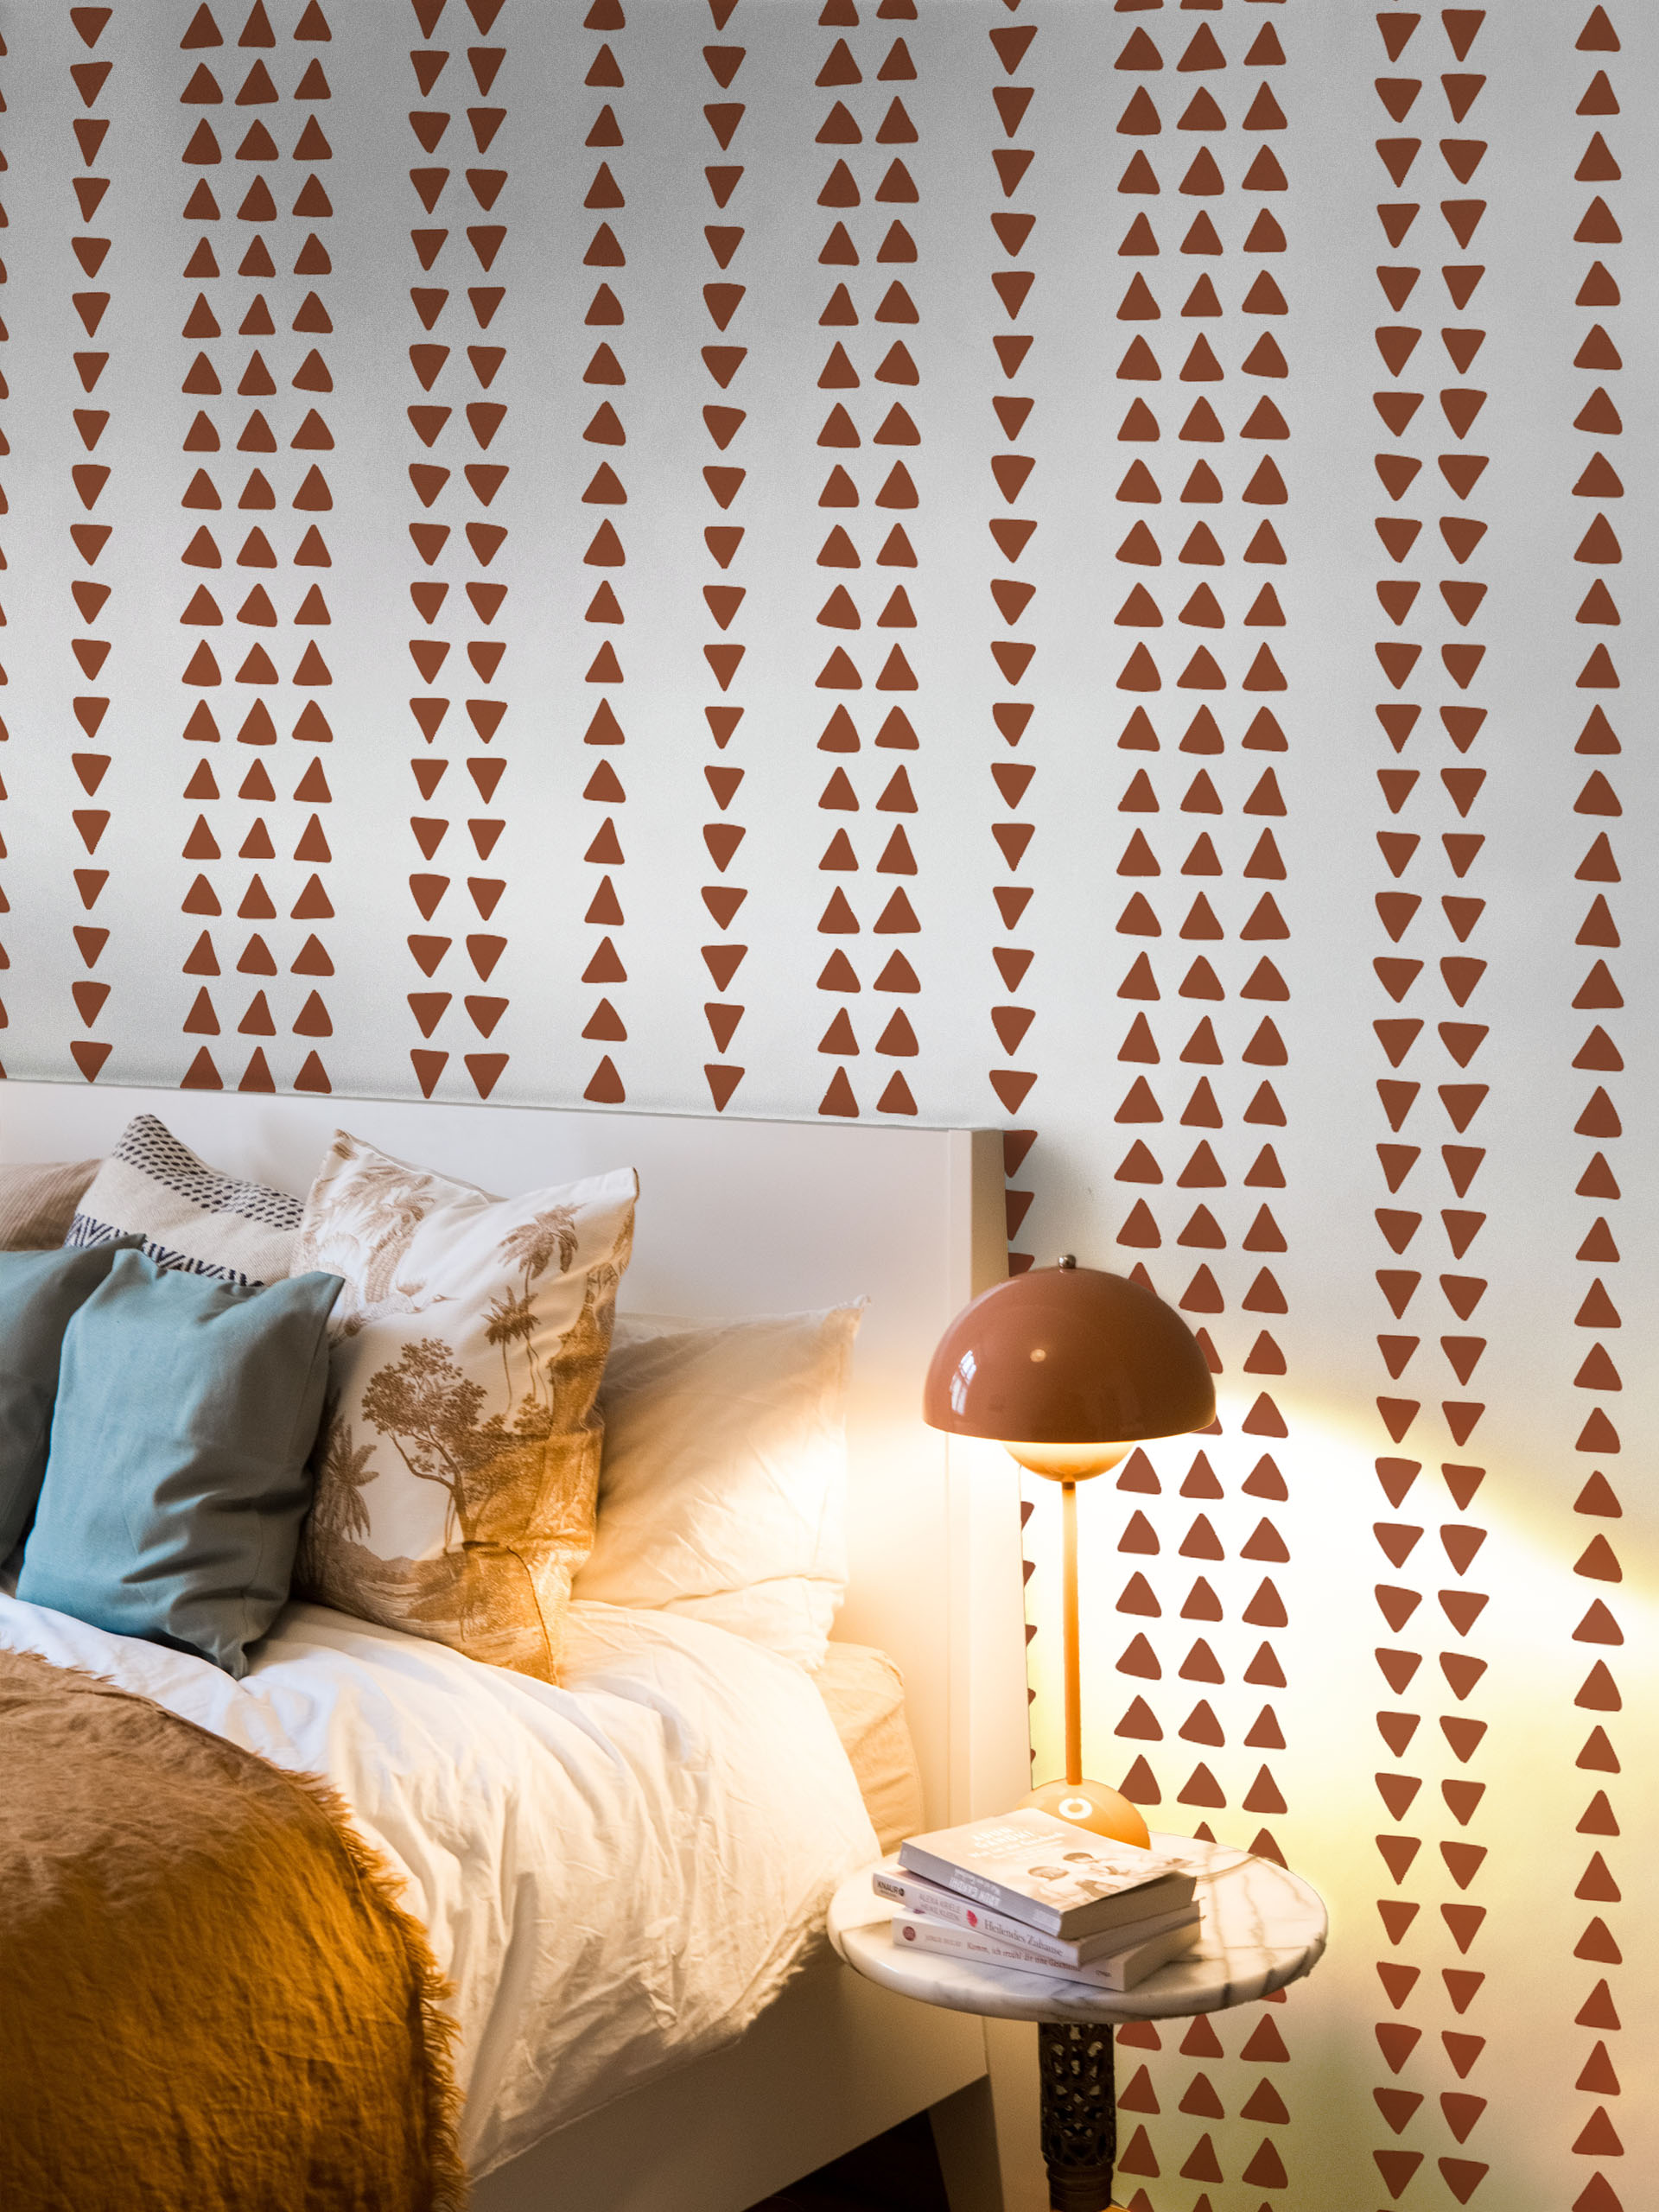 dormitorio terracota papel pintado geométrico triángulos boho chic